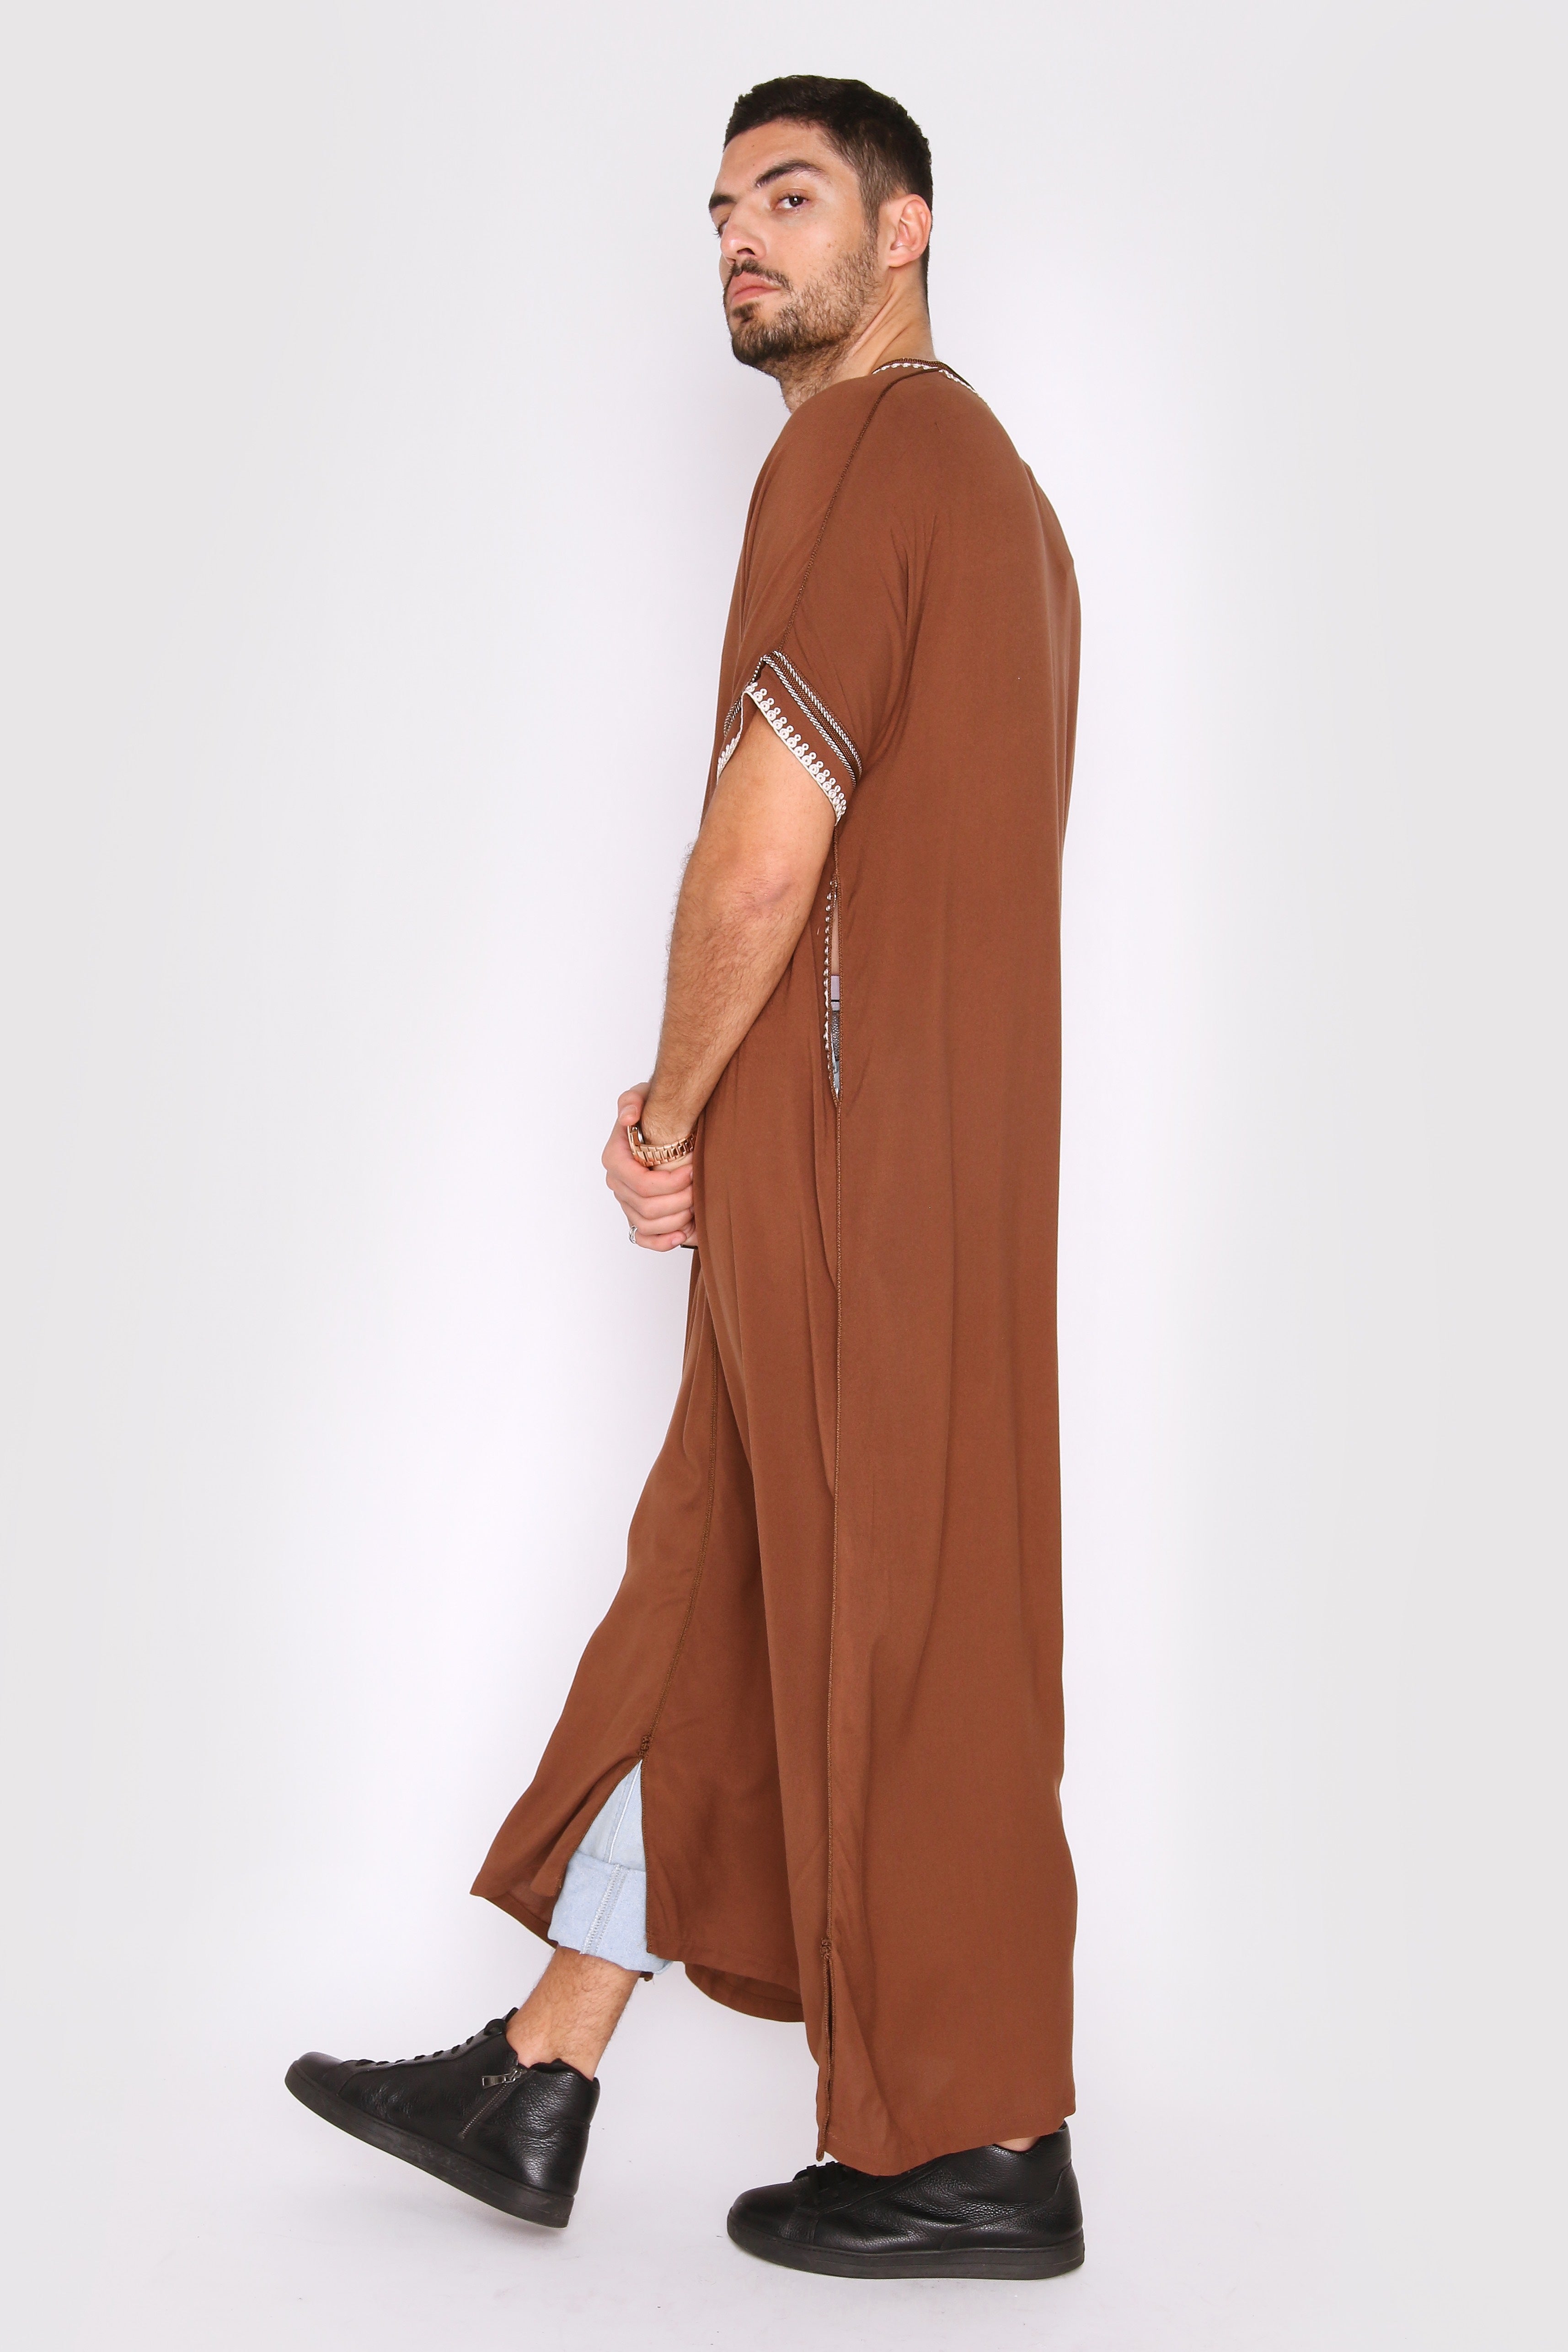 Gandoura Sevilla Men's Short Sleeve Full-Length Pocket Robe Thobe in Brown